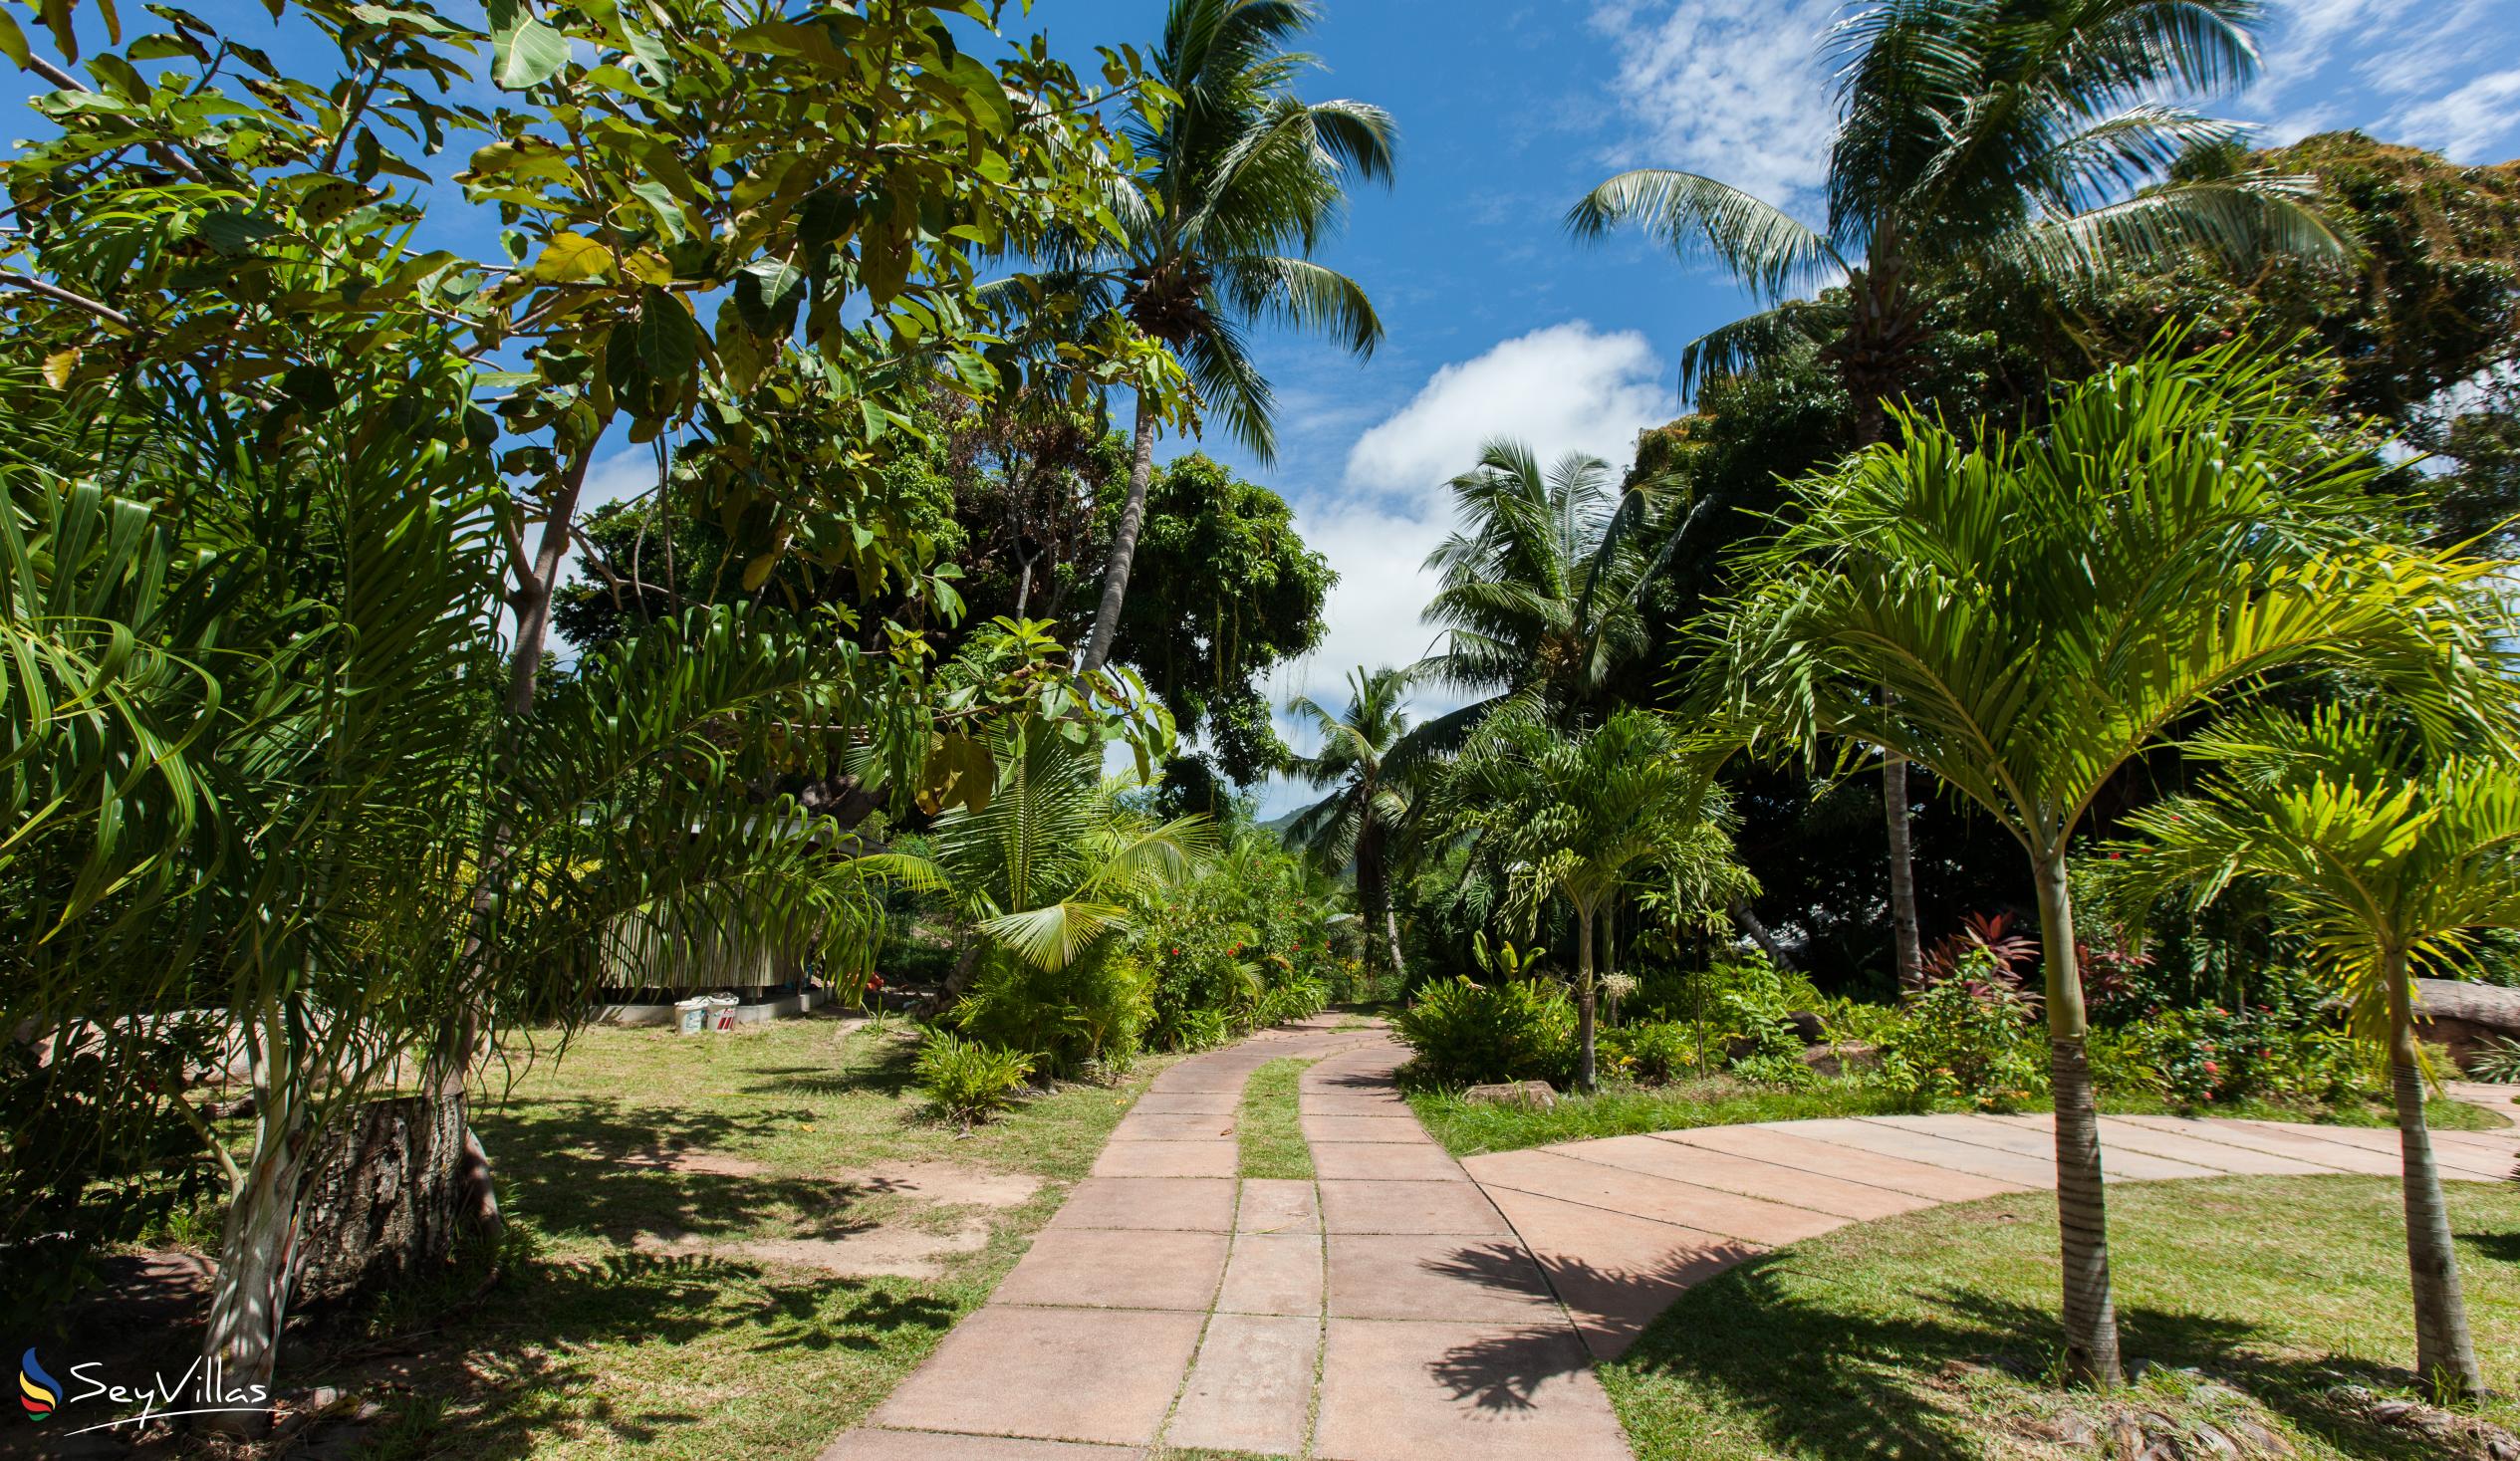 Foto 55: Villa Deckenia - Posizione - Praslin (Seychelles)